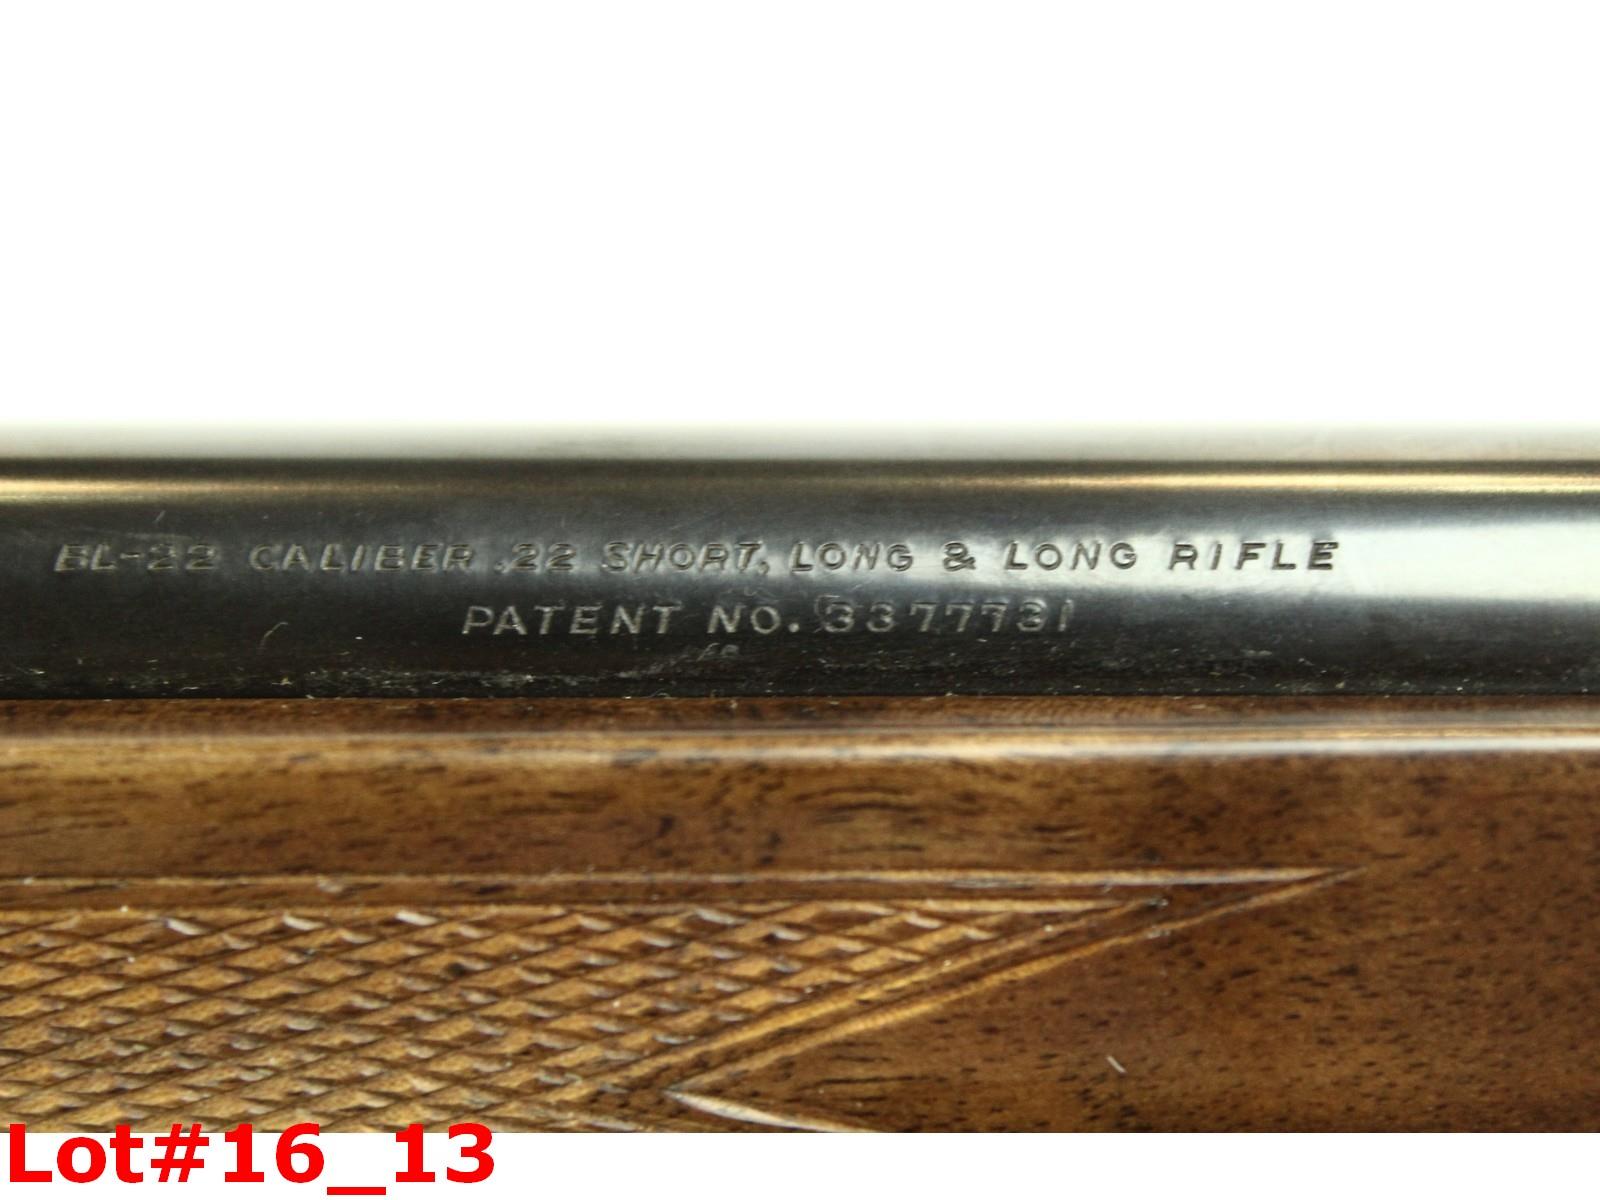 Browning BL-22 22S,L,LR Caliber Rifle